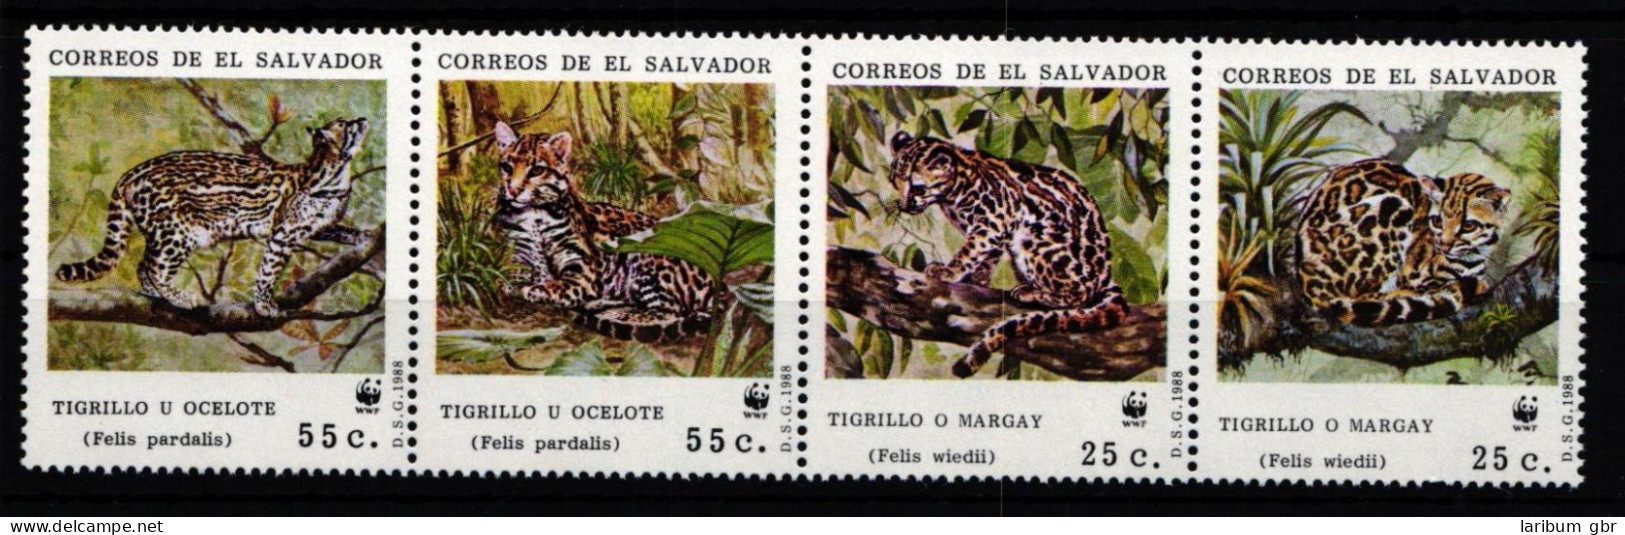 El Salvador 1734-1737 Postfrisch Viererstreifen / Wildtiere #IH428 - Salvador